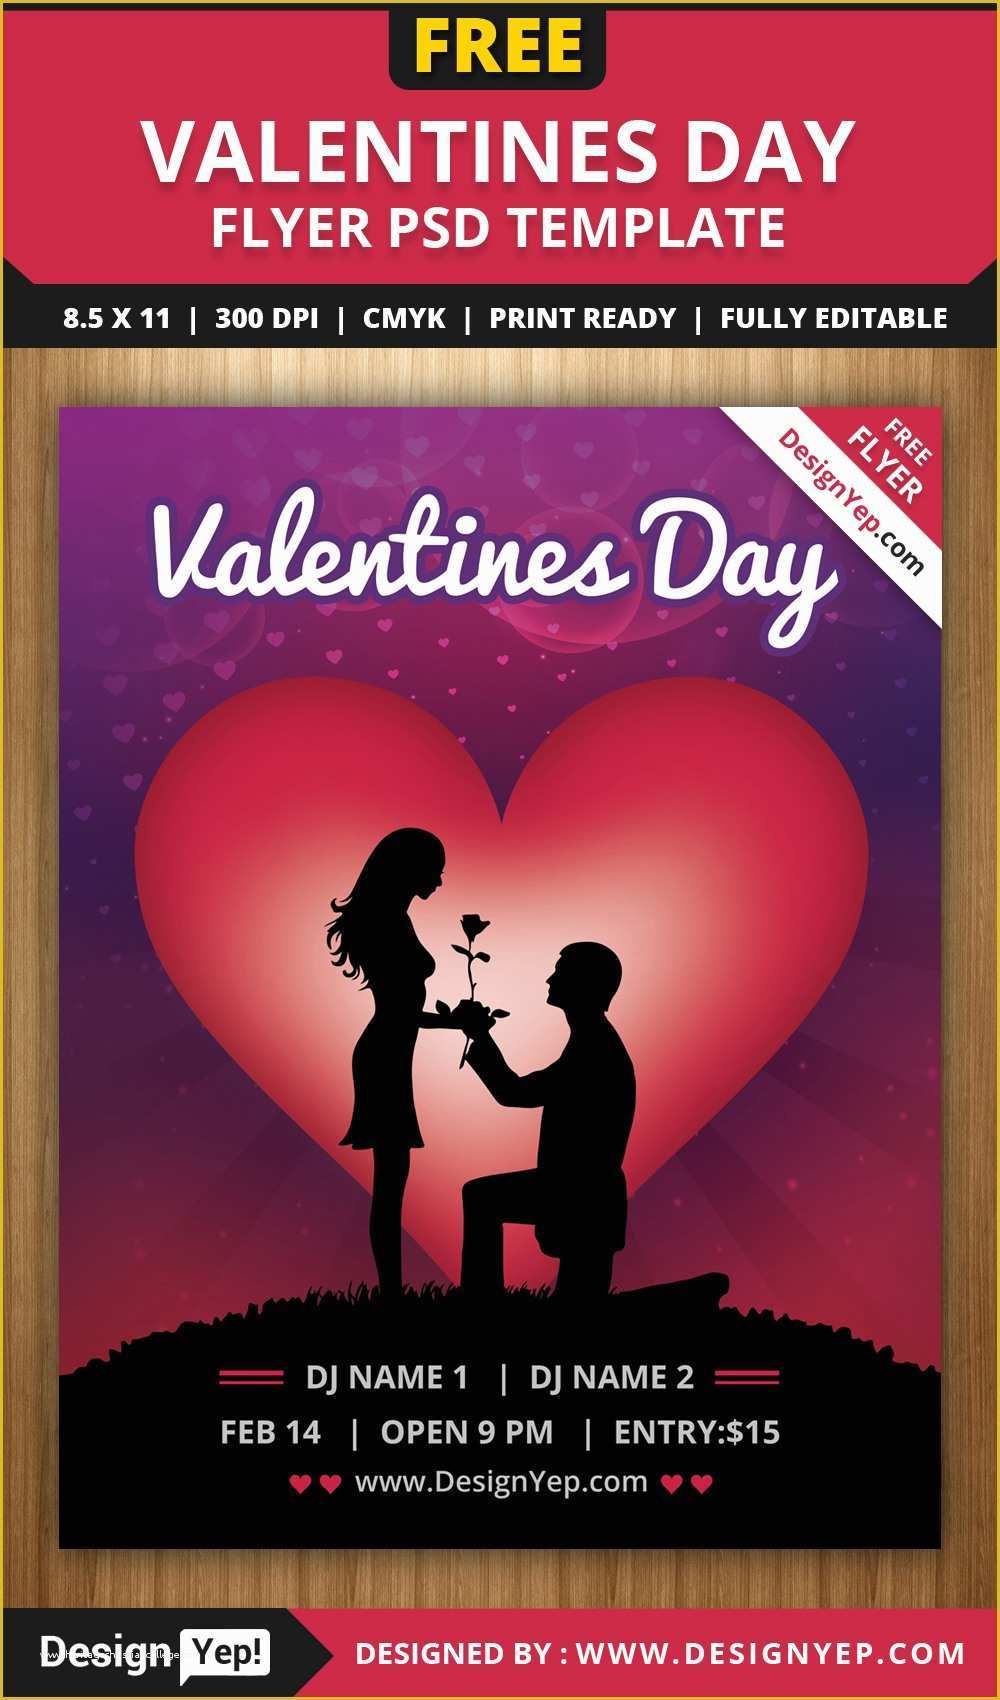 Valentine Flyer Template Free Of Free Valentines Day Flyer Psd Template Designyep